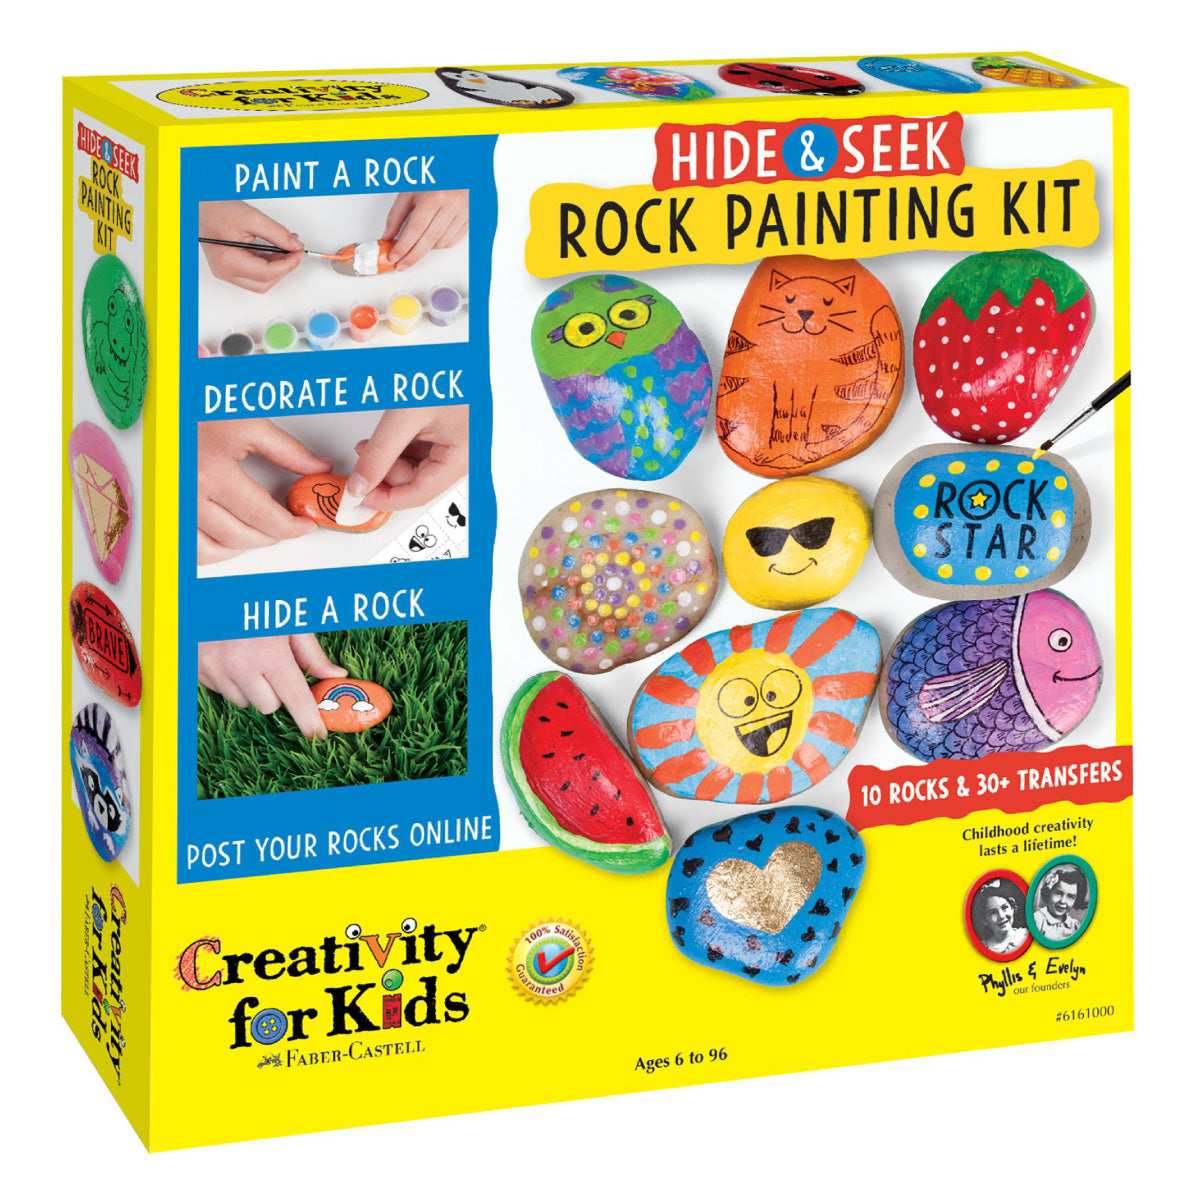 Hide & Seek Rock Painting Kit from Creativity for Kids